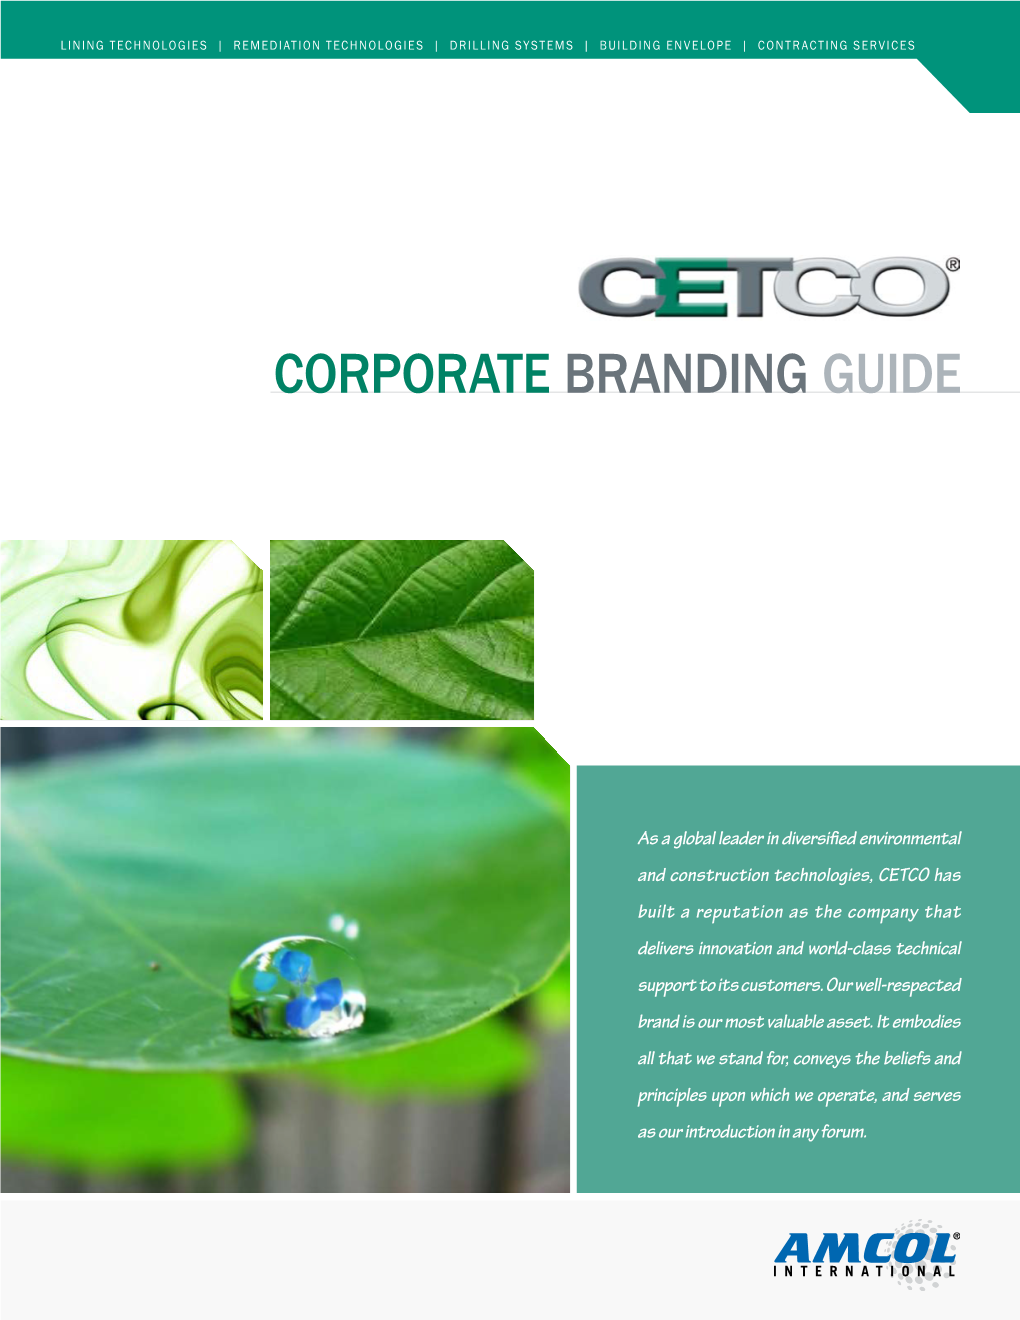 Corporate Branding Guide